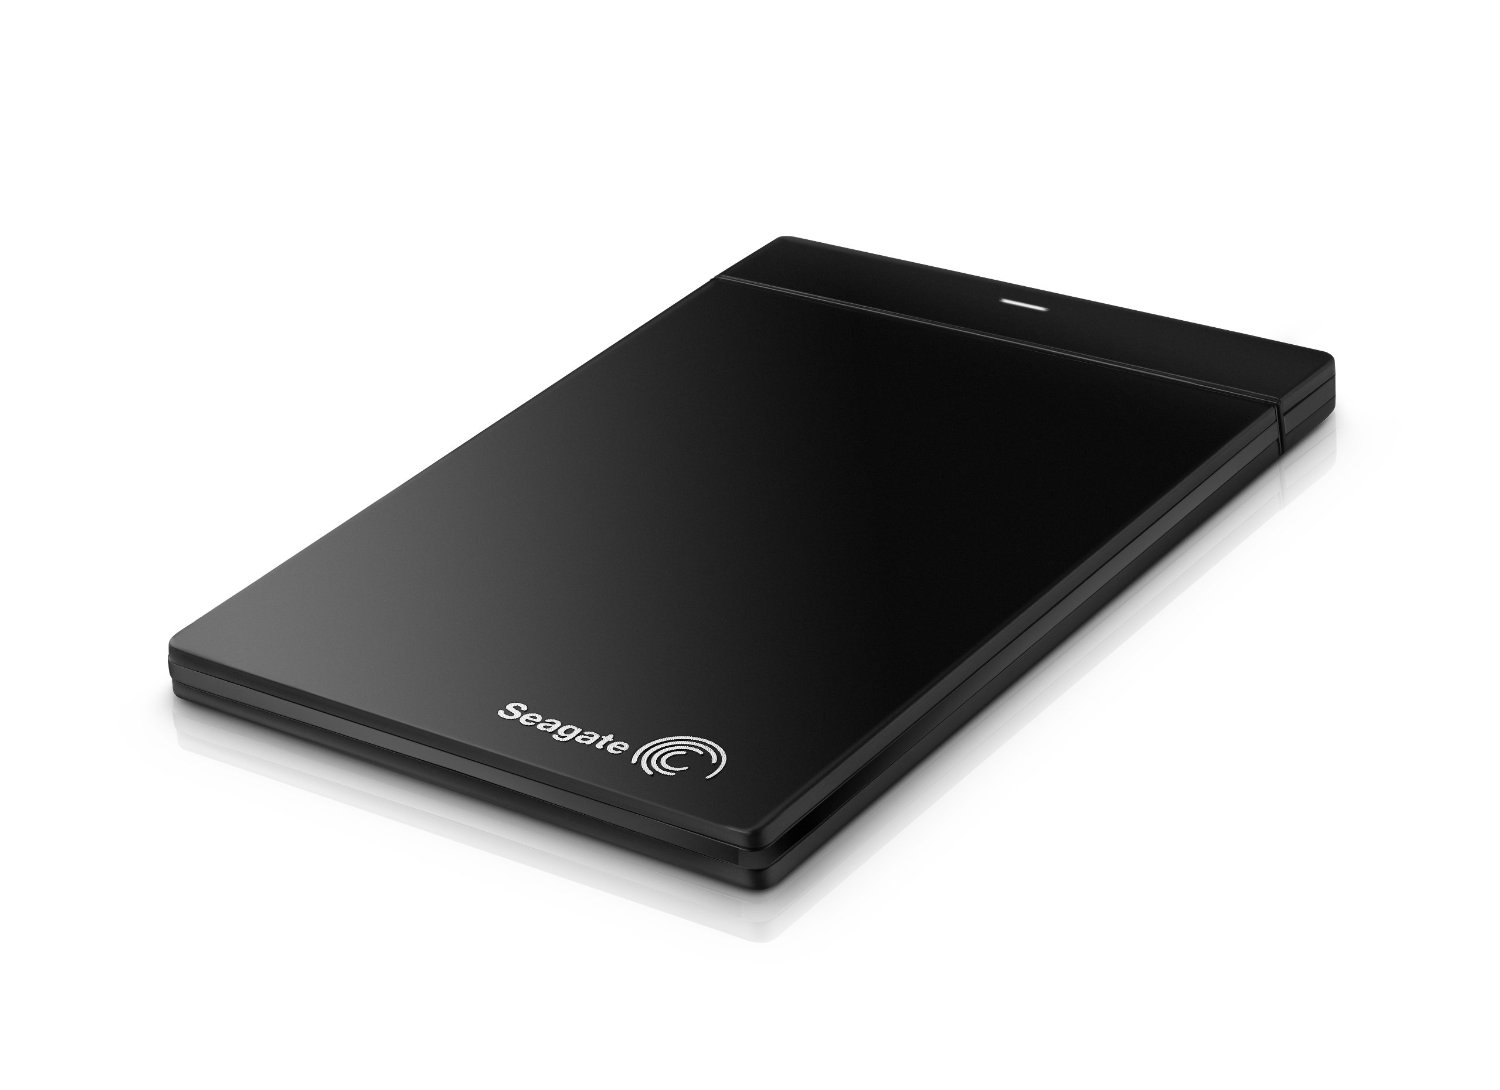 Seagate Slim 500 GB USB 3.0 Portable Hard Drive STCD500100 (PC - USB 3.0) $64.99+free shipping